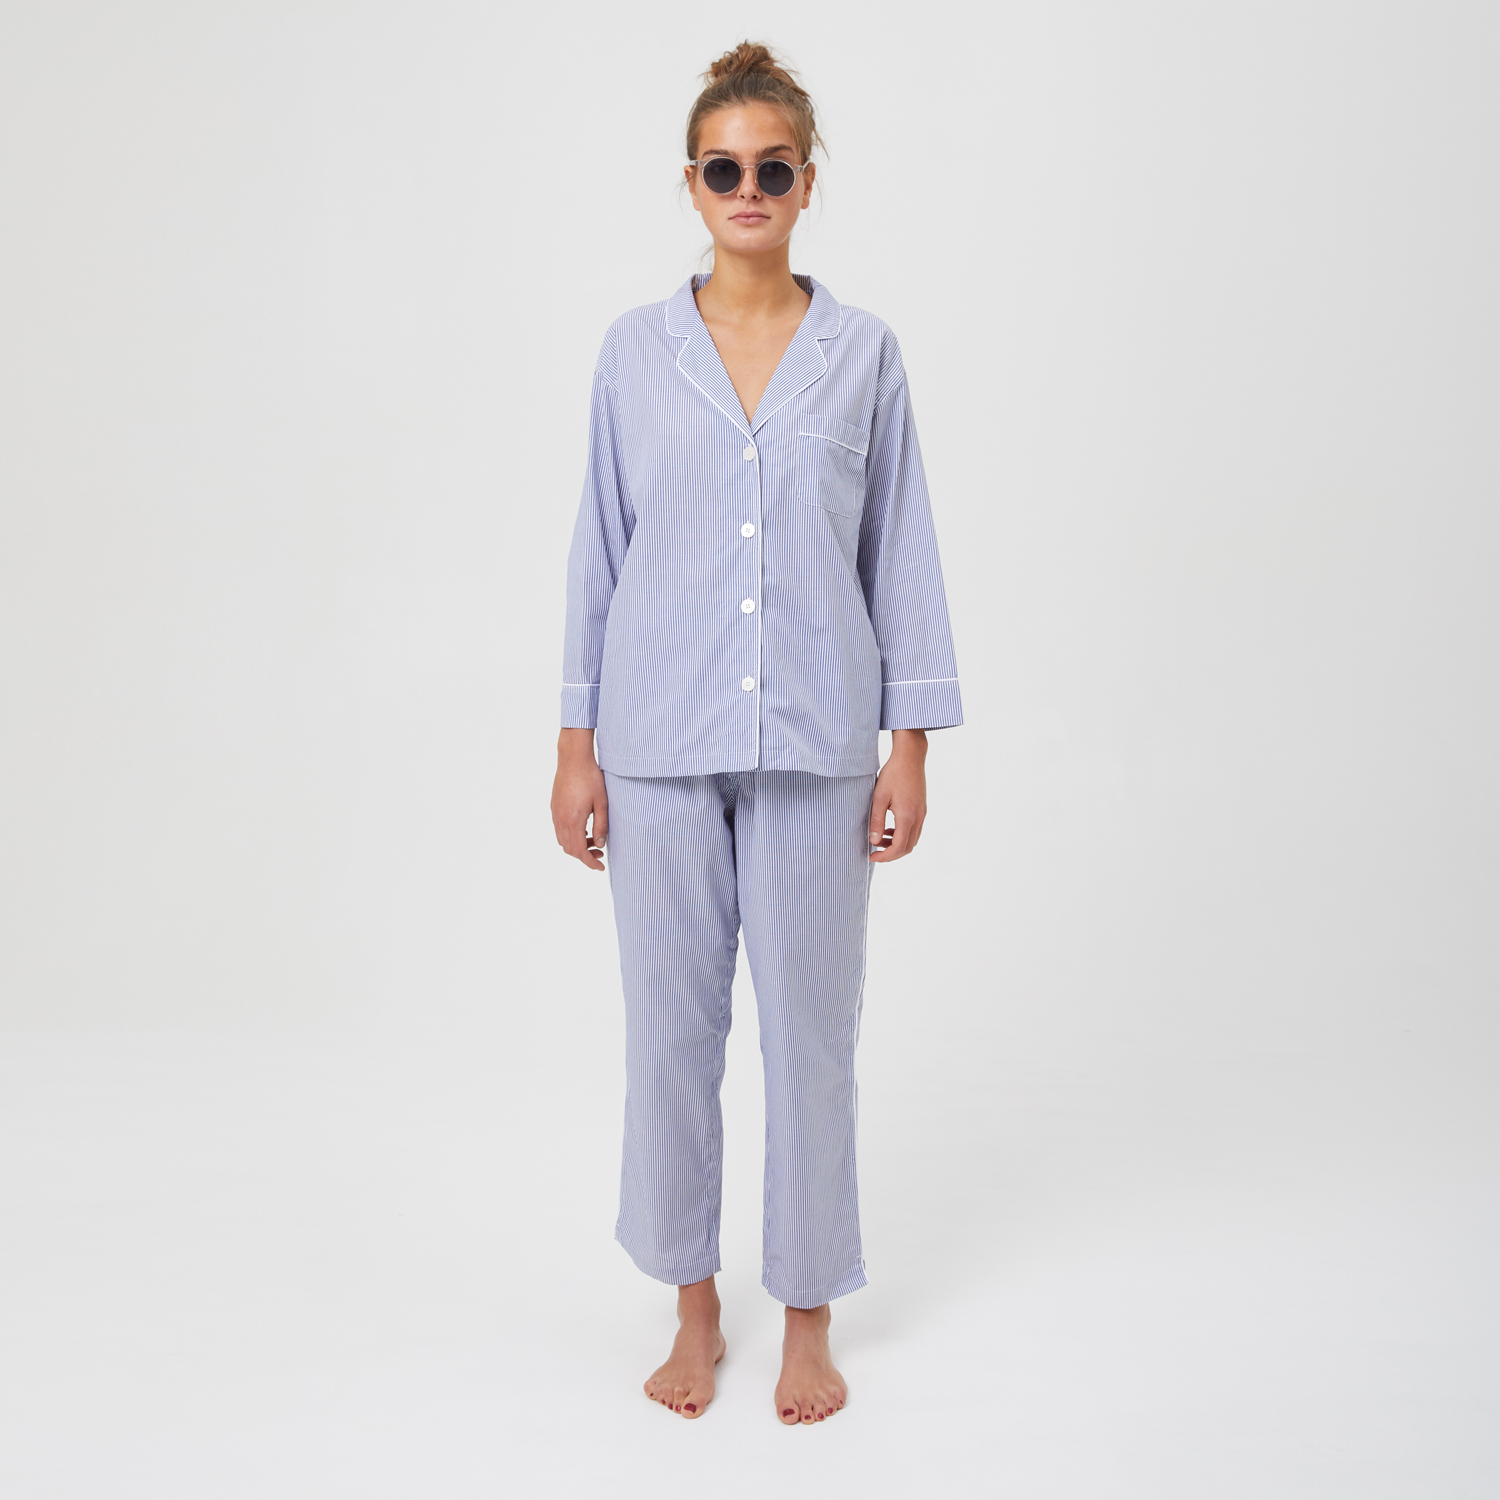 Eve Thin Stripe Blue & White Pyjama-1